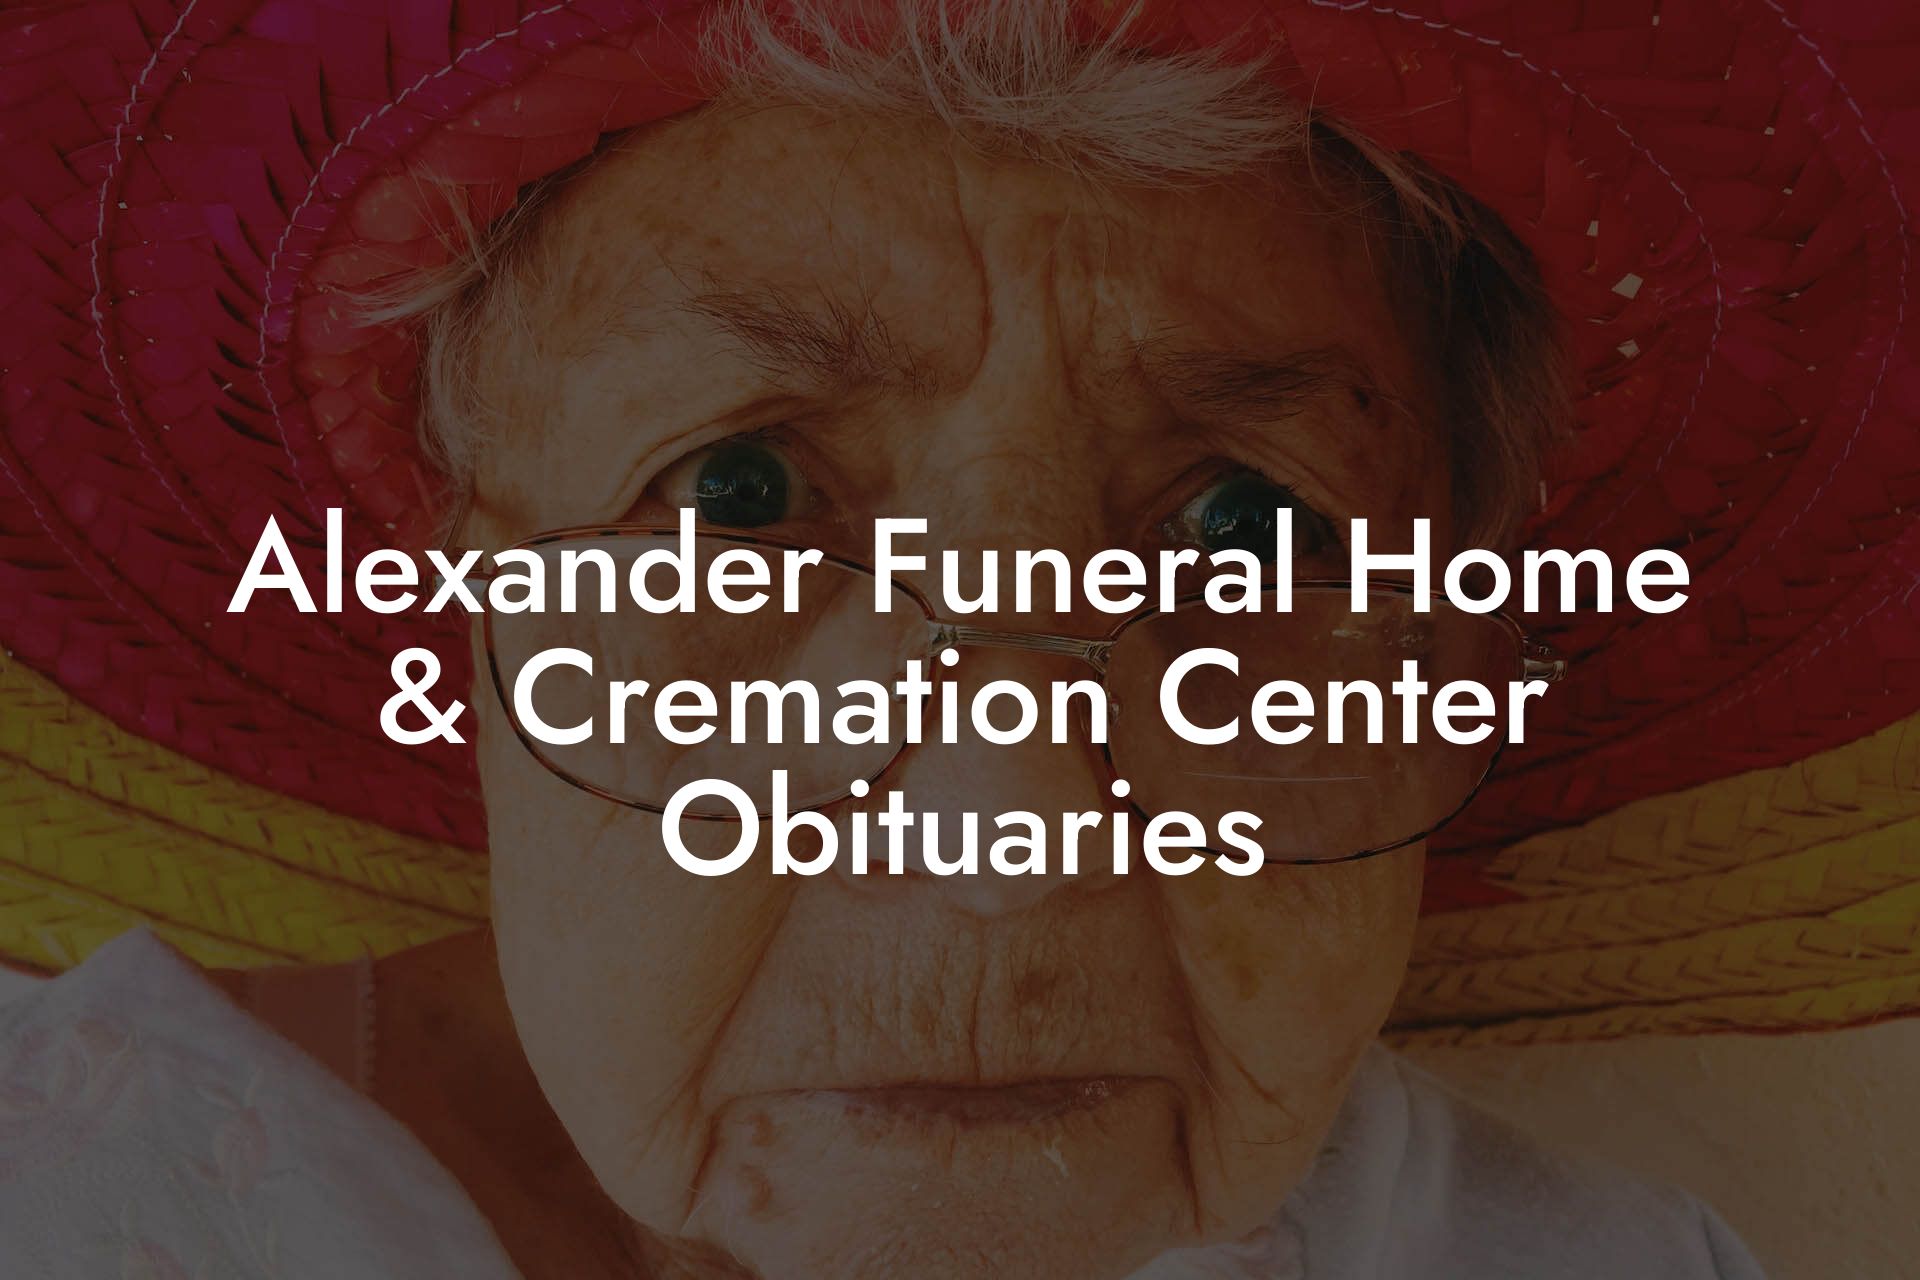 Alexander Funeral Home & Cremation Center Obituaries